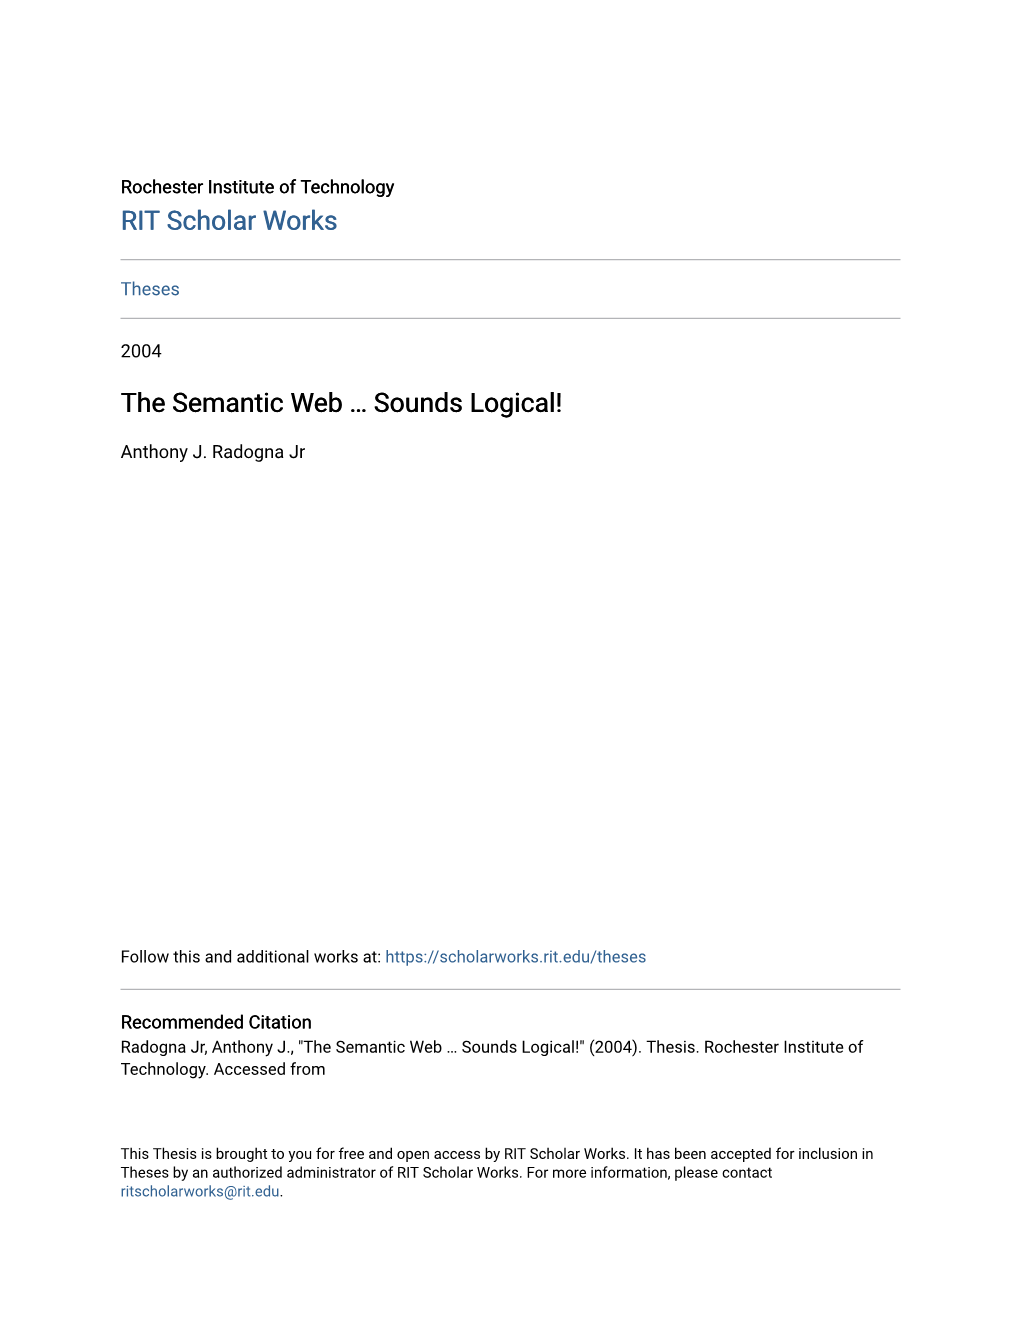 The Semantic Web … Sounds Logical!